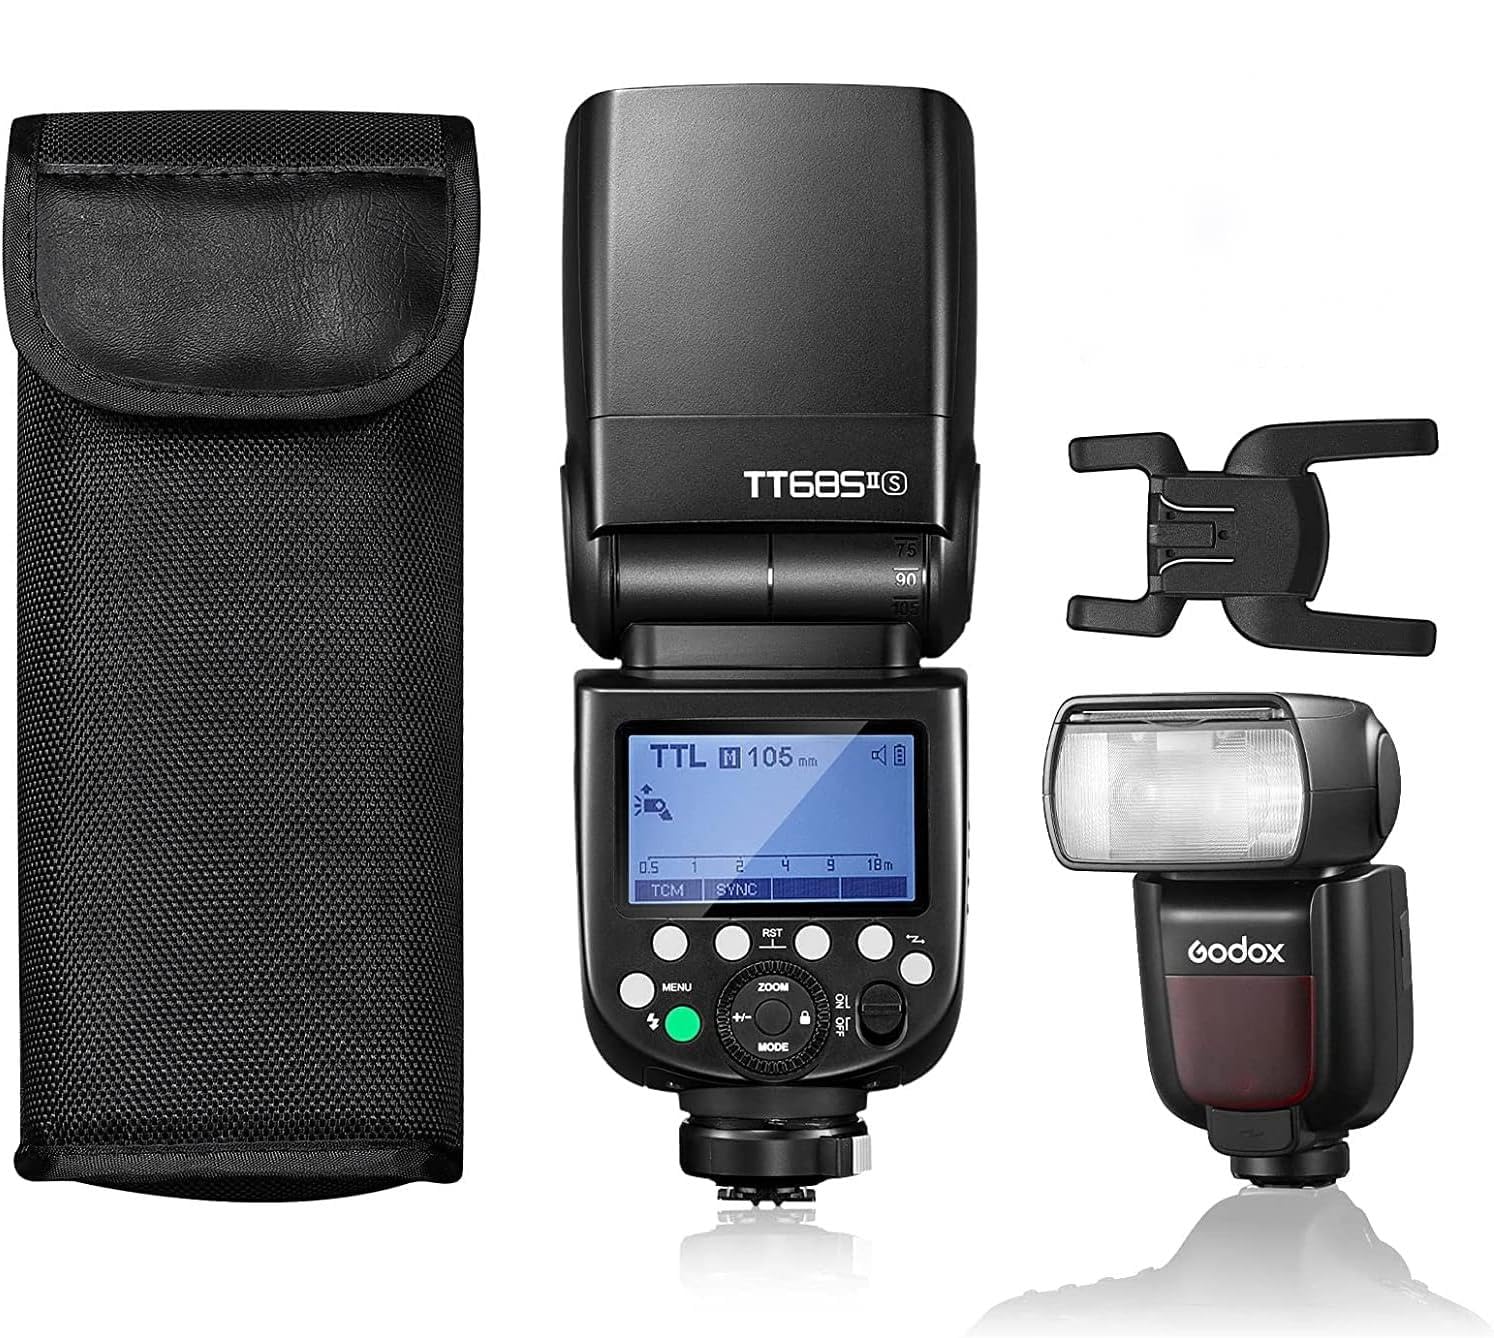 Godox正規代理店GODOX TT685II-S フラッシュストロポ 2.4G HSS 1 / 8000S TTL GN60 330フルパワーポップ TCMインスタント変換 クイックリリースロック Sonyカメラ用フラッシュスピードライト